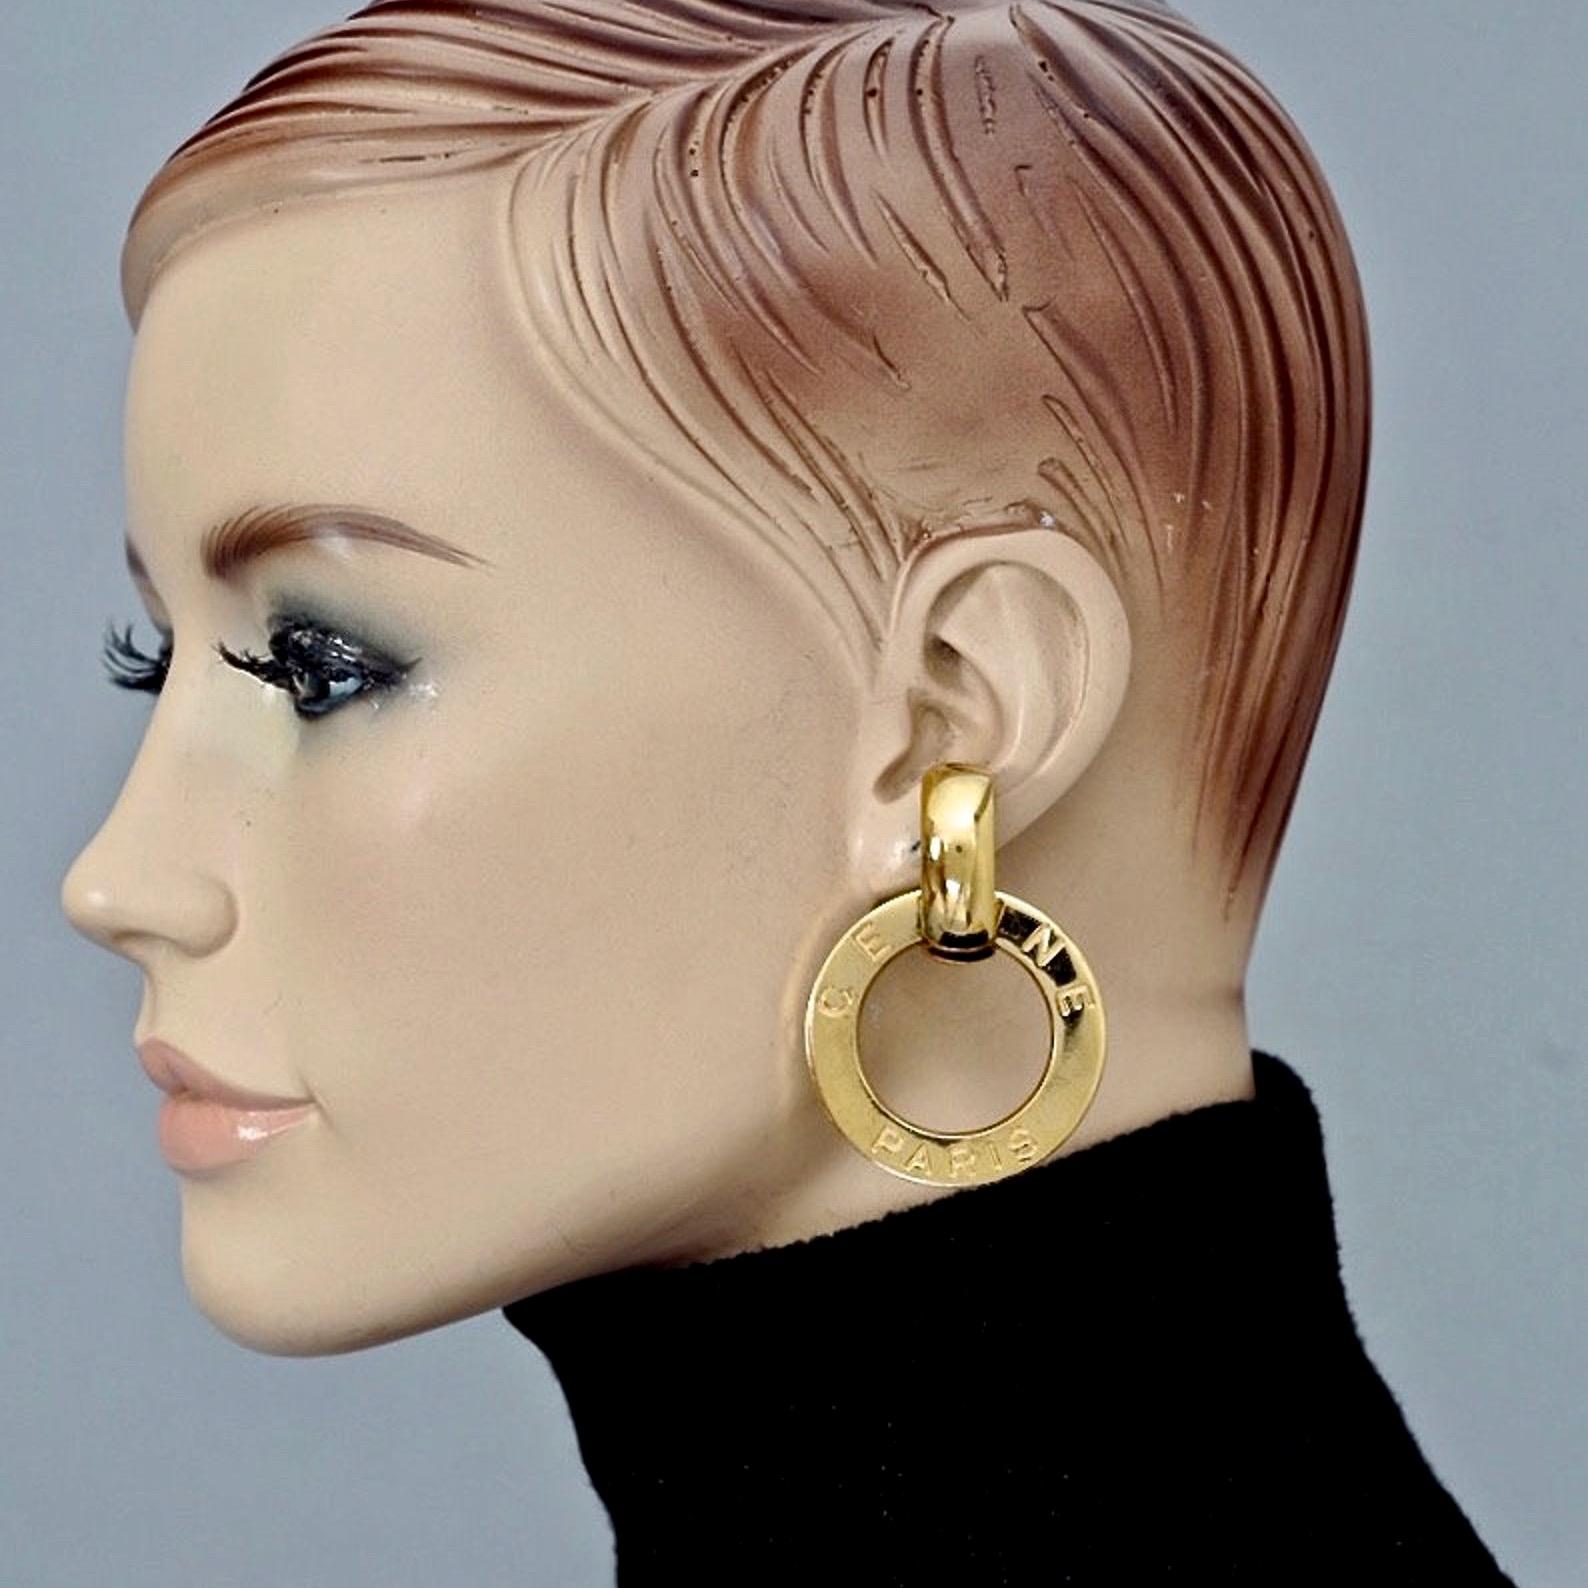 Vintage CELINE PARIS Logo Hoop Earrings

Measurements:
Height: 2.24 inches (5.7 cm)
Wearable Length: 1.61 inches (4.1 cm)
Weight per Earring: 32 gram

Features:
- 100% Authentic CELINE Paris.
- Dangling hoop earrings with engraved CELINE PARIS.
-